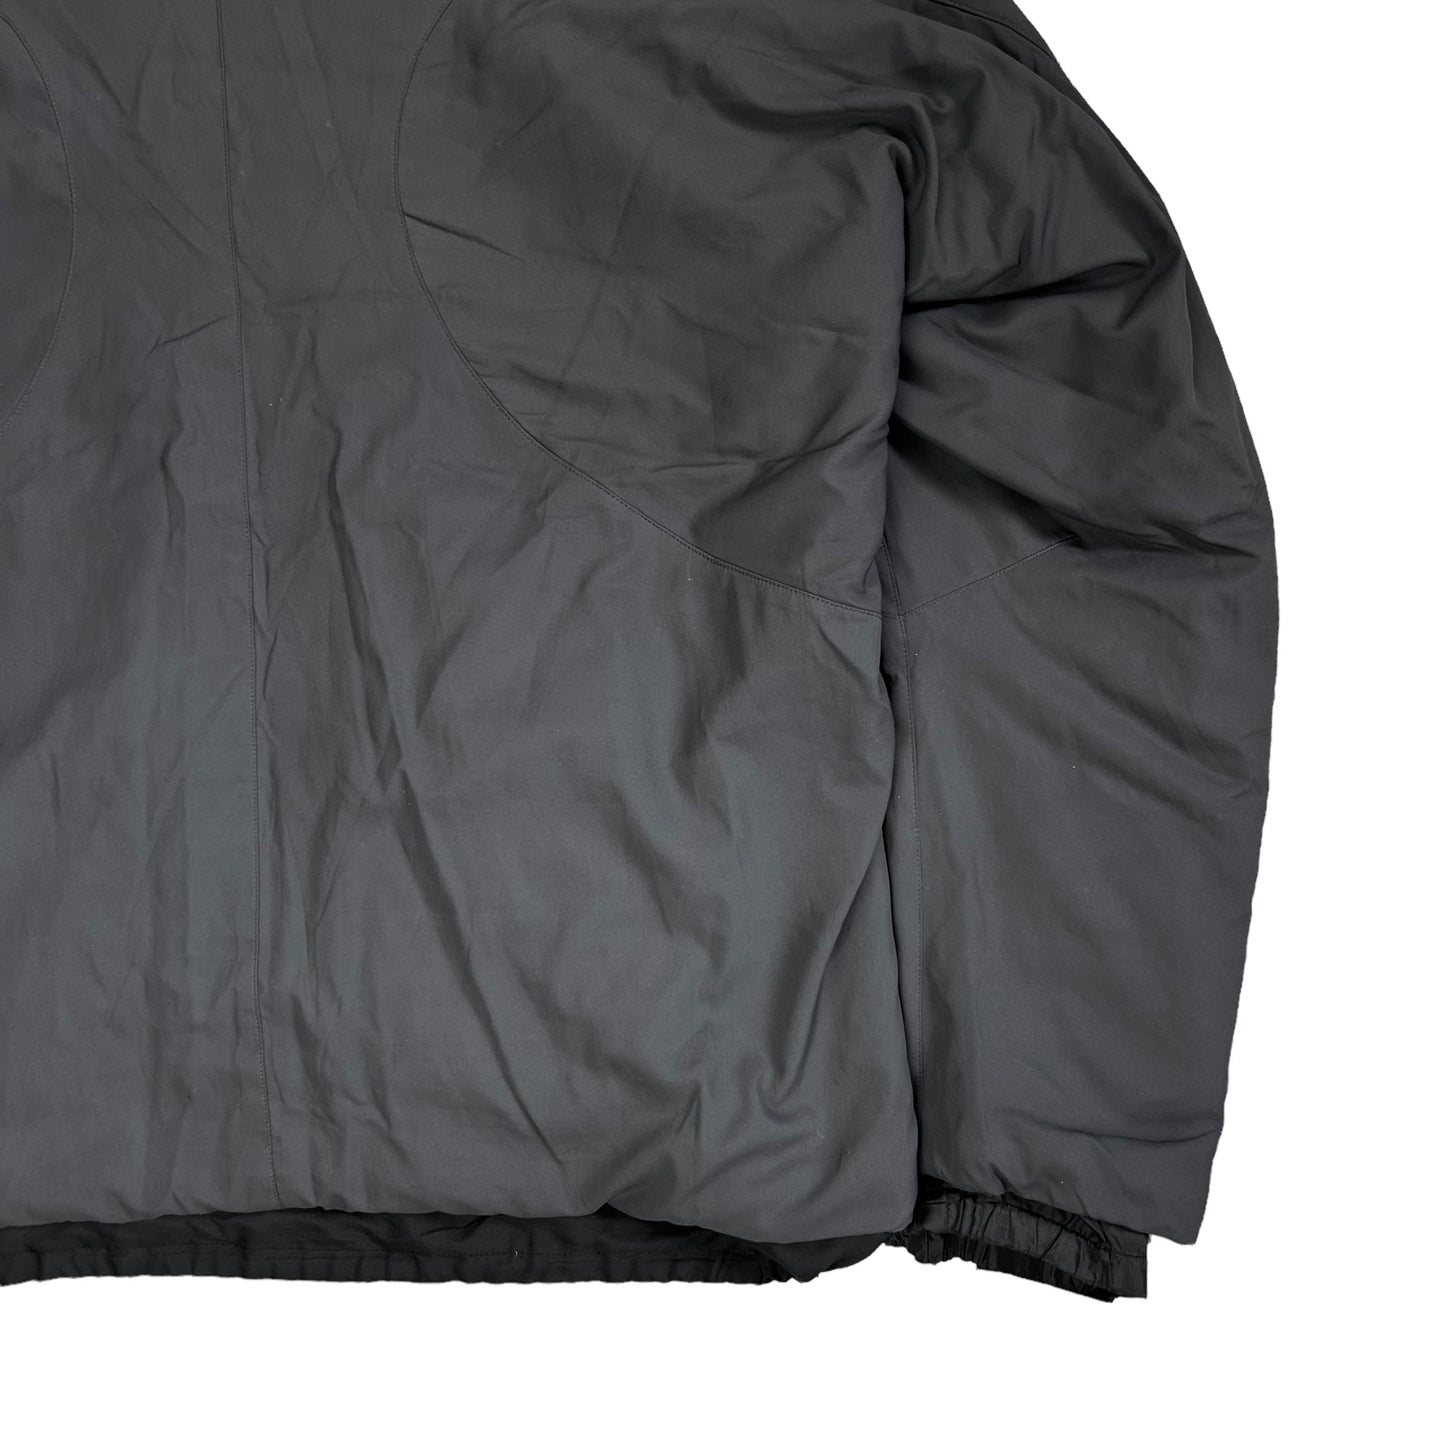 Prada Double Layered Hood Shell Jacket